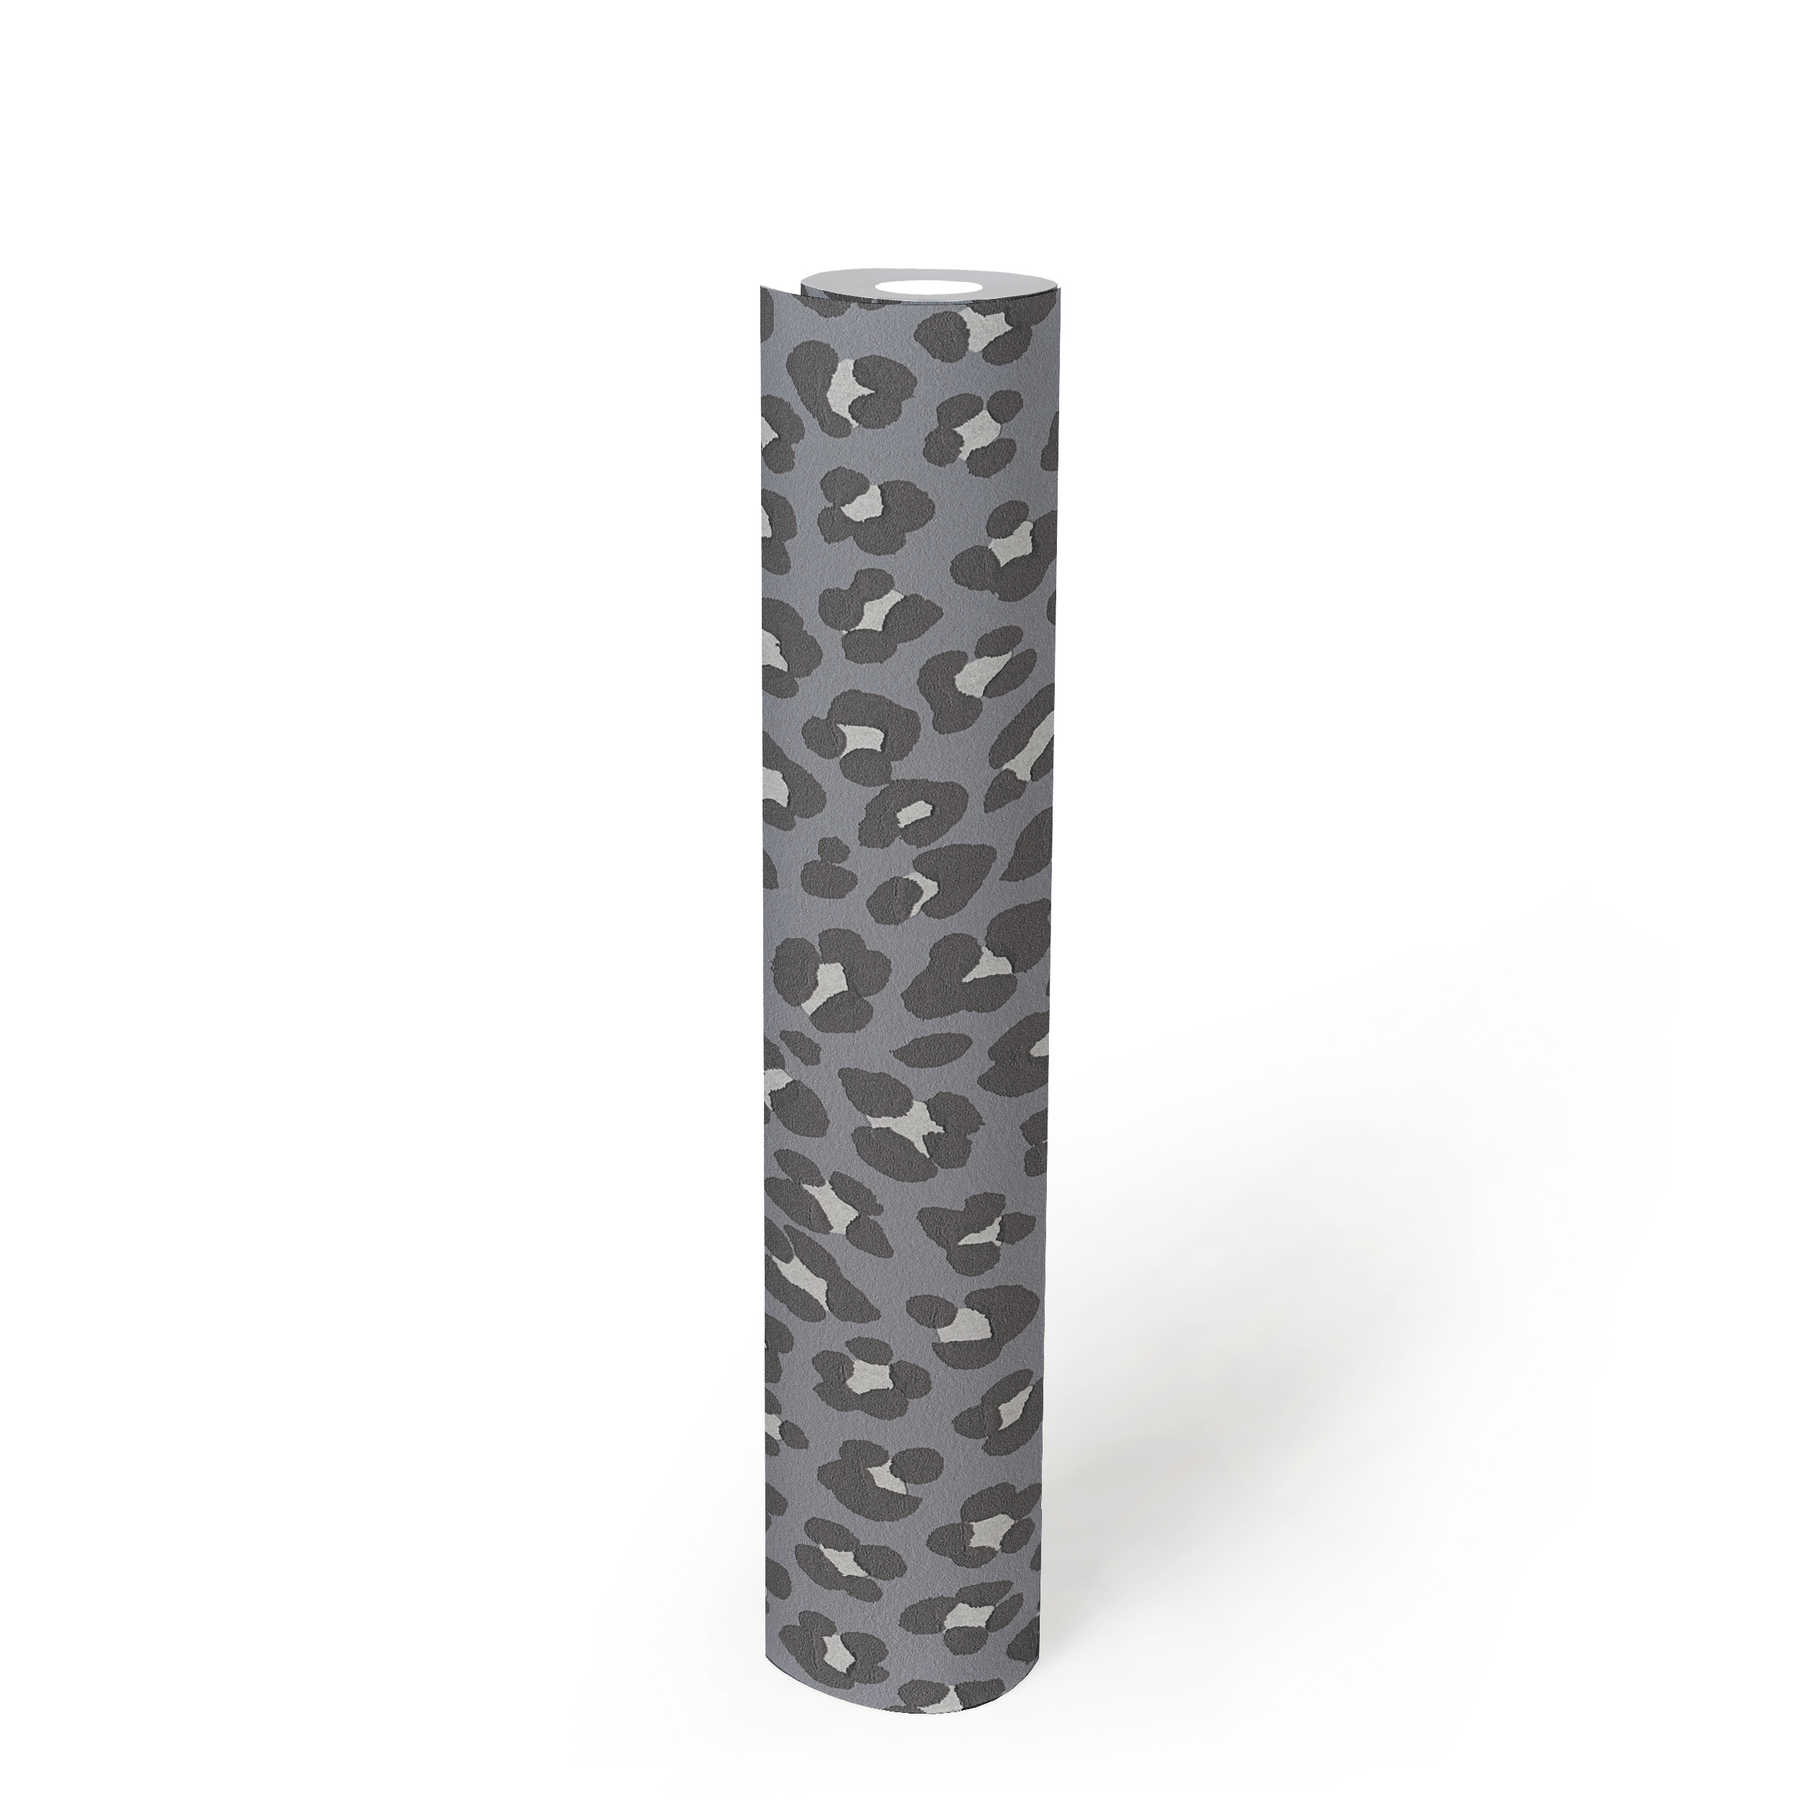             Silberne Tapete mit Animal Print Leopard – Metallic
        